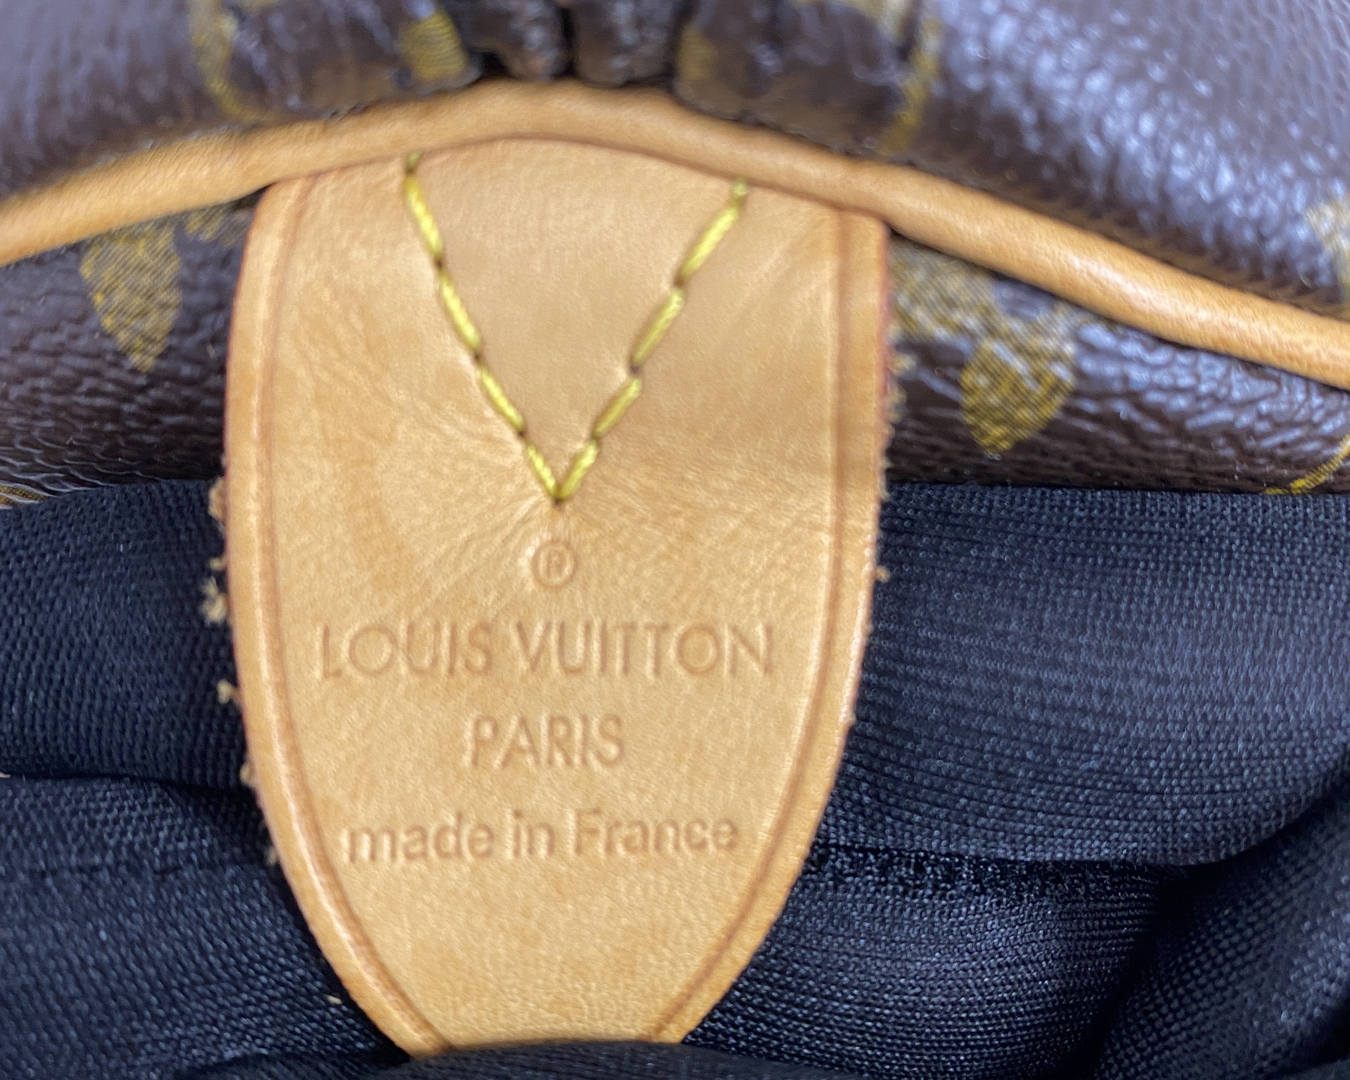 Louis Vuitton Monogram Canvas Keepall 55 QJB0GI4J0B152